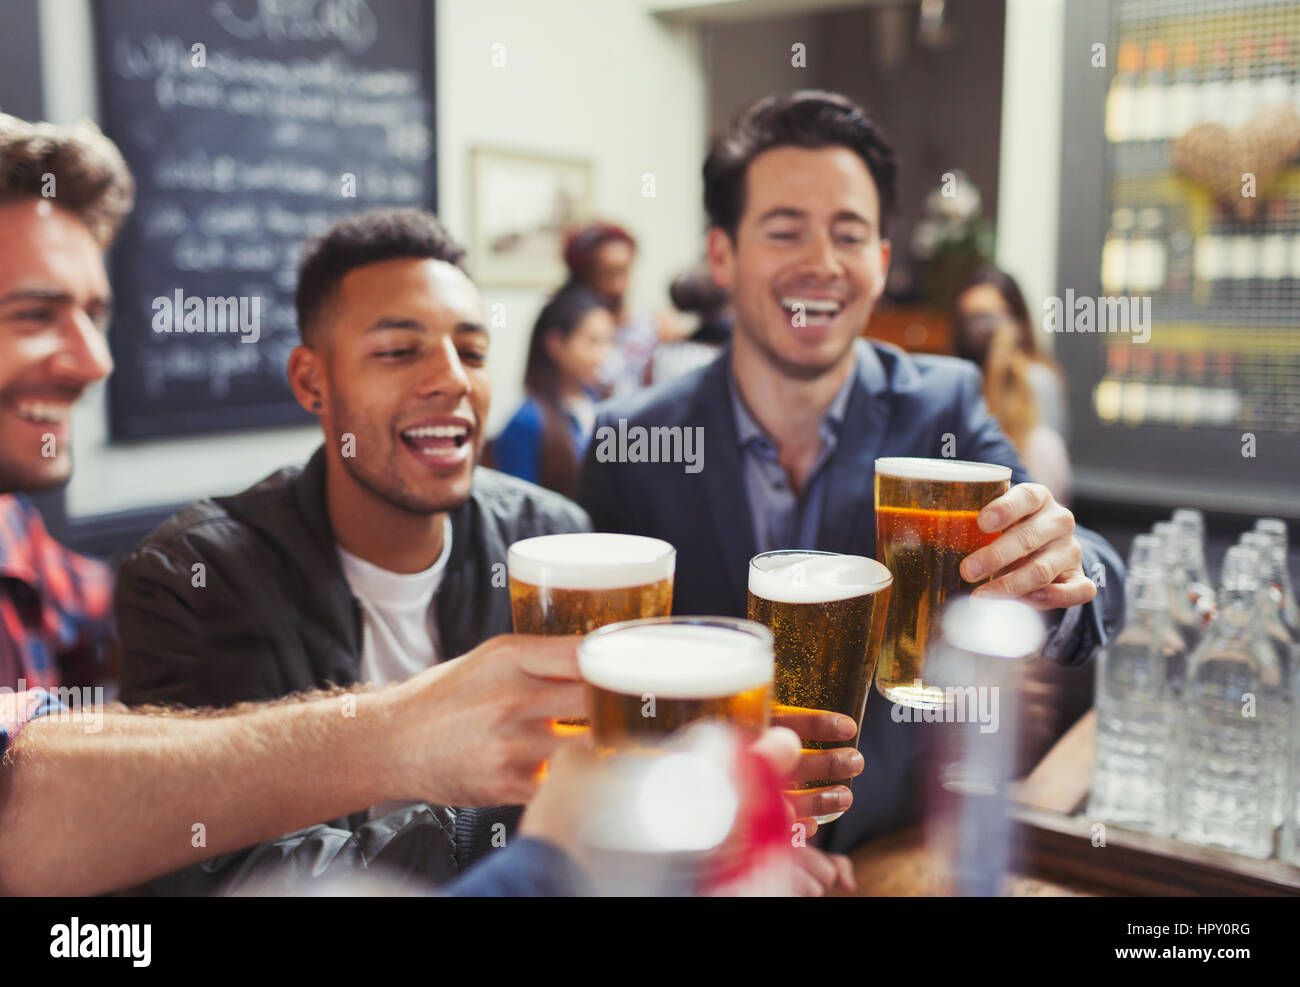 Men friends toasting beer glasses at bar Stock Photo